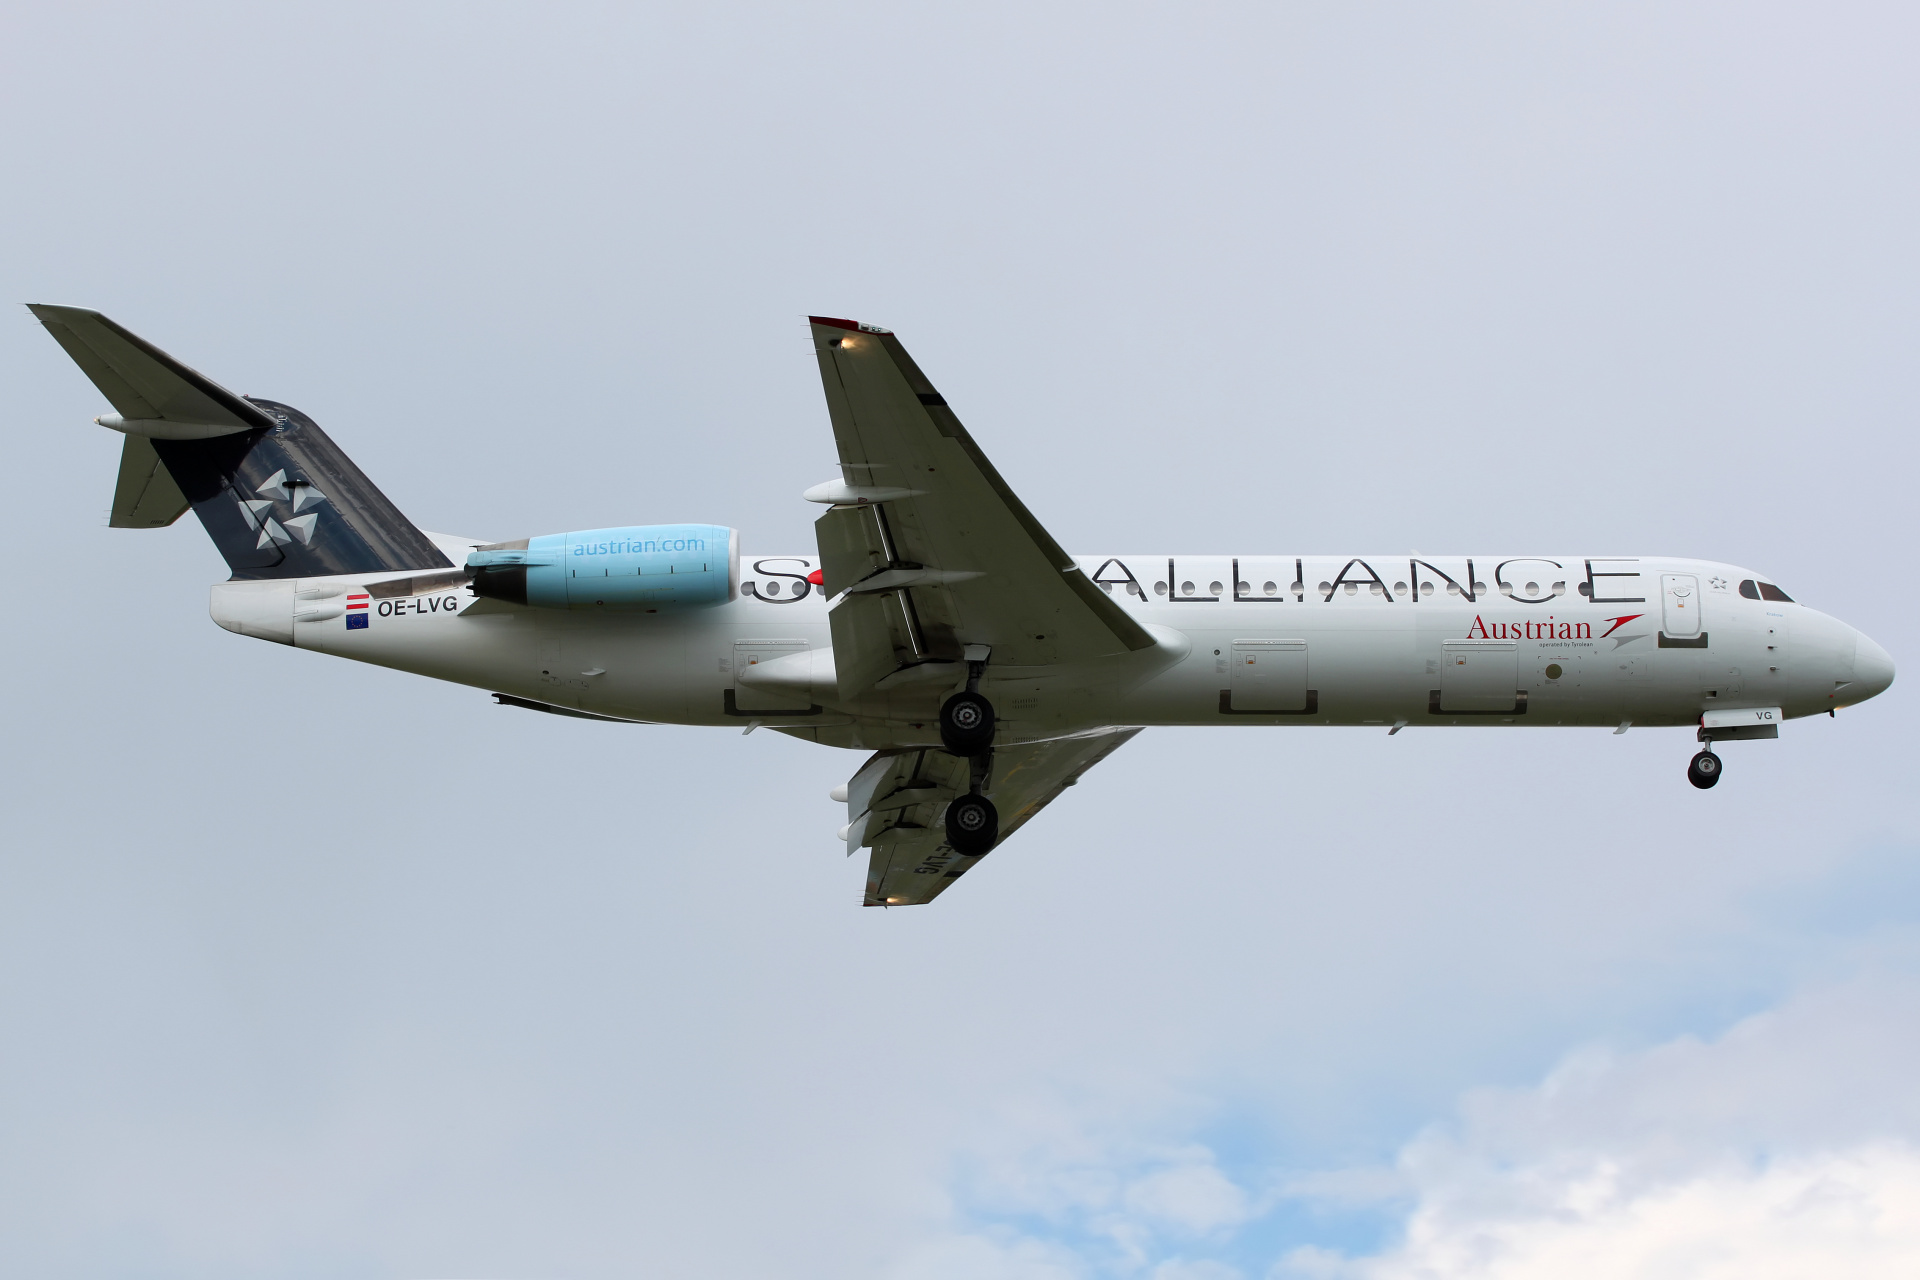 OE-LVG, Austrian Airlines (Star Alliance livery) (Aircraft » EPWA Spotting » Fokker 100)